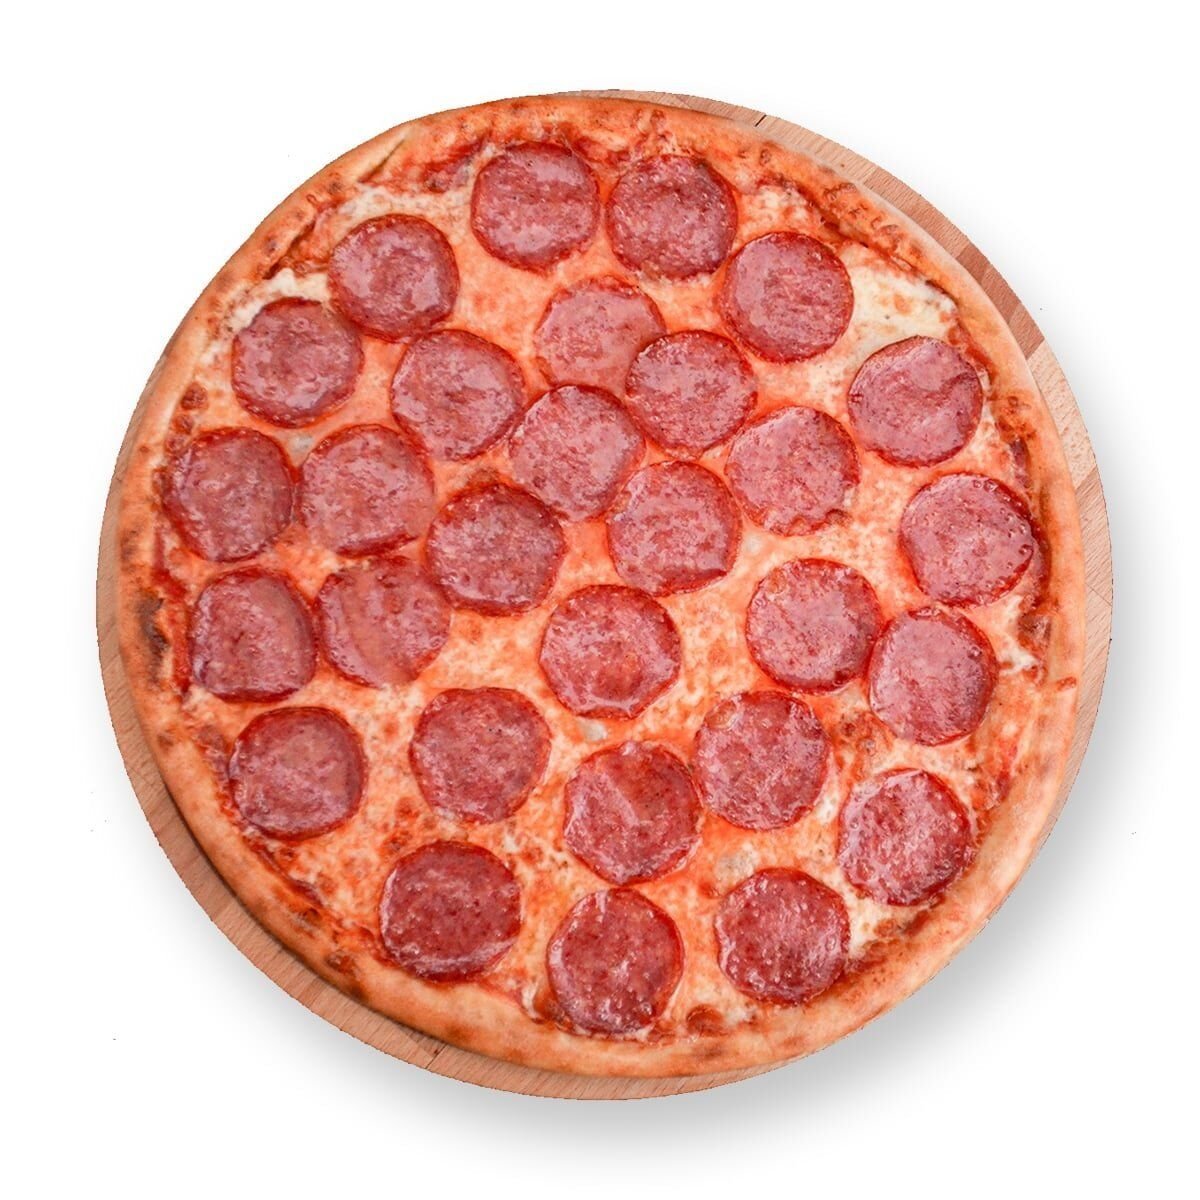 пицца пепперони фото на белом фоне фото 92